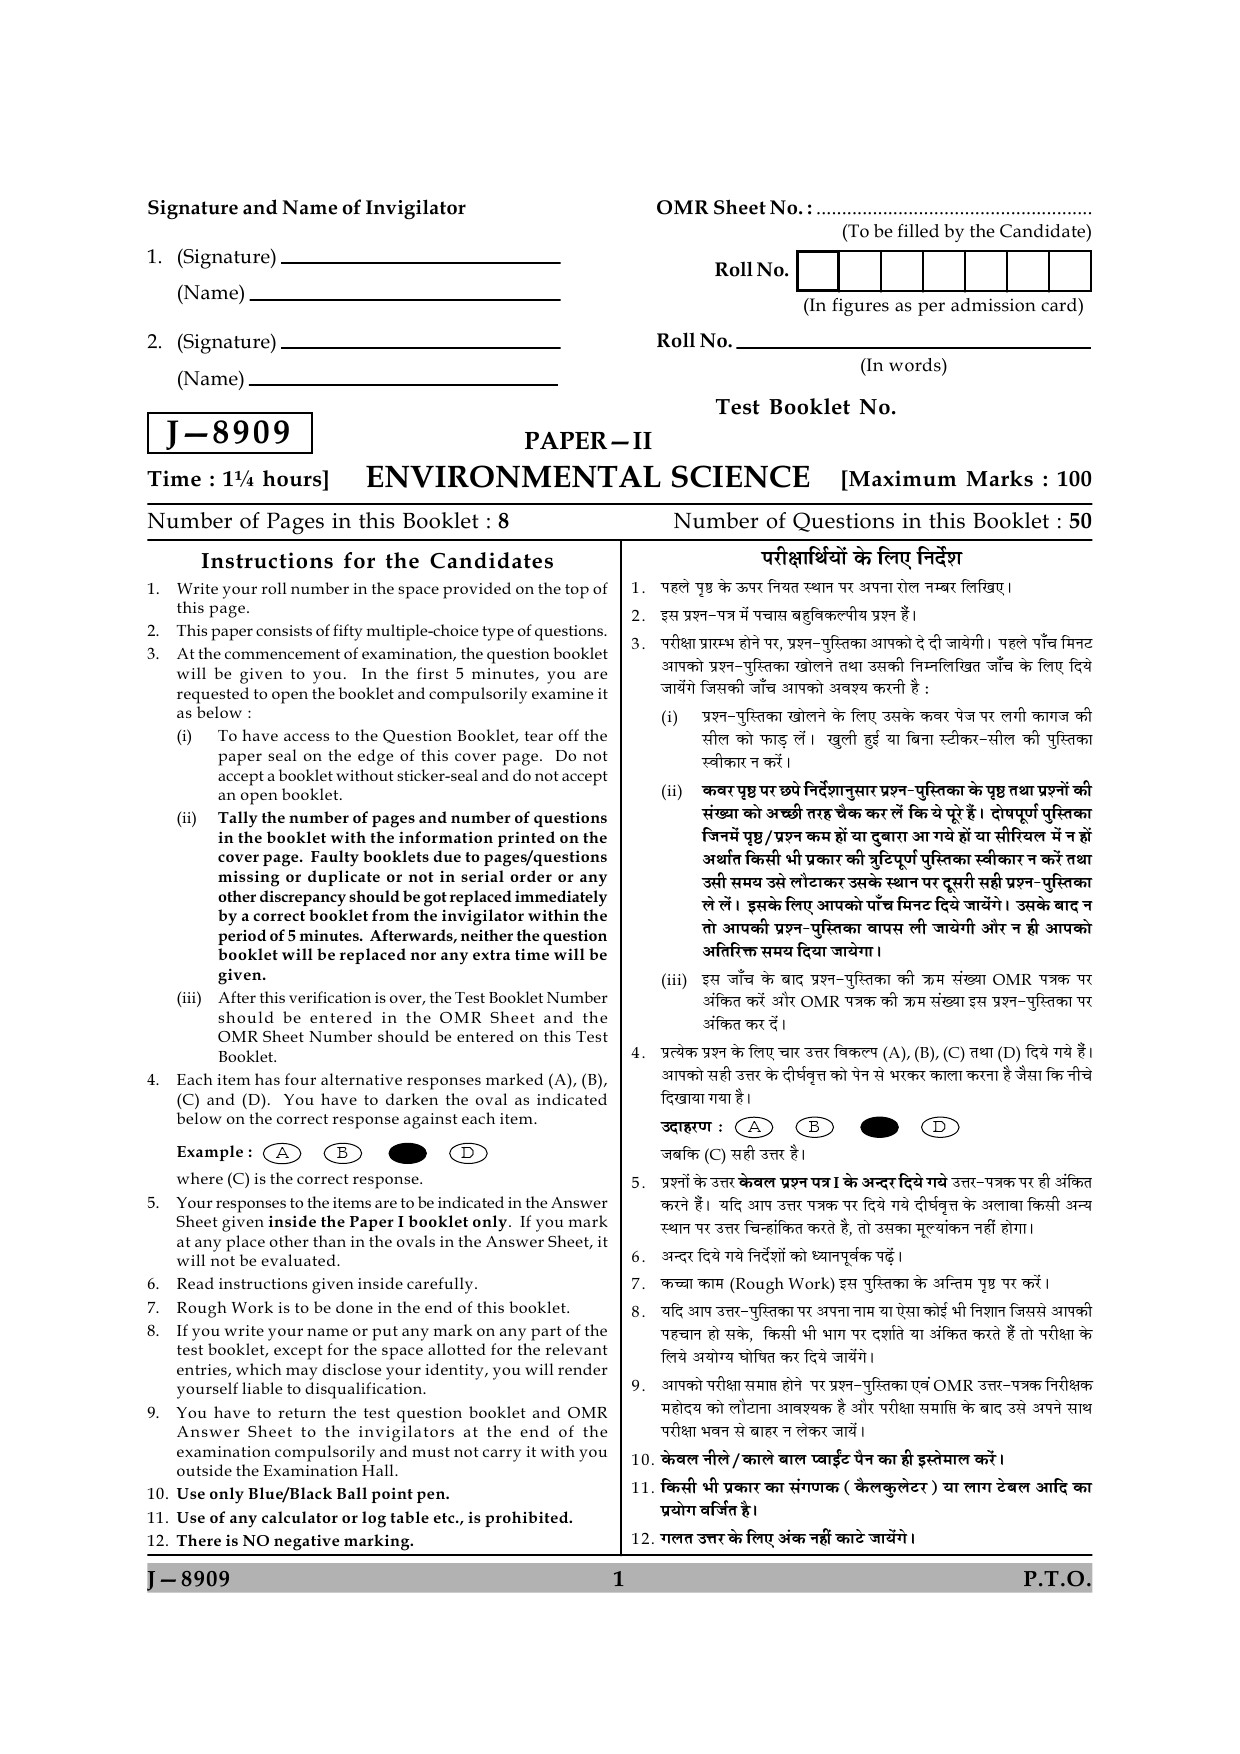 UGC NET Environmental Science Question Paper II June 2009 1